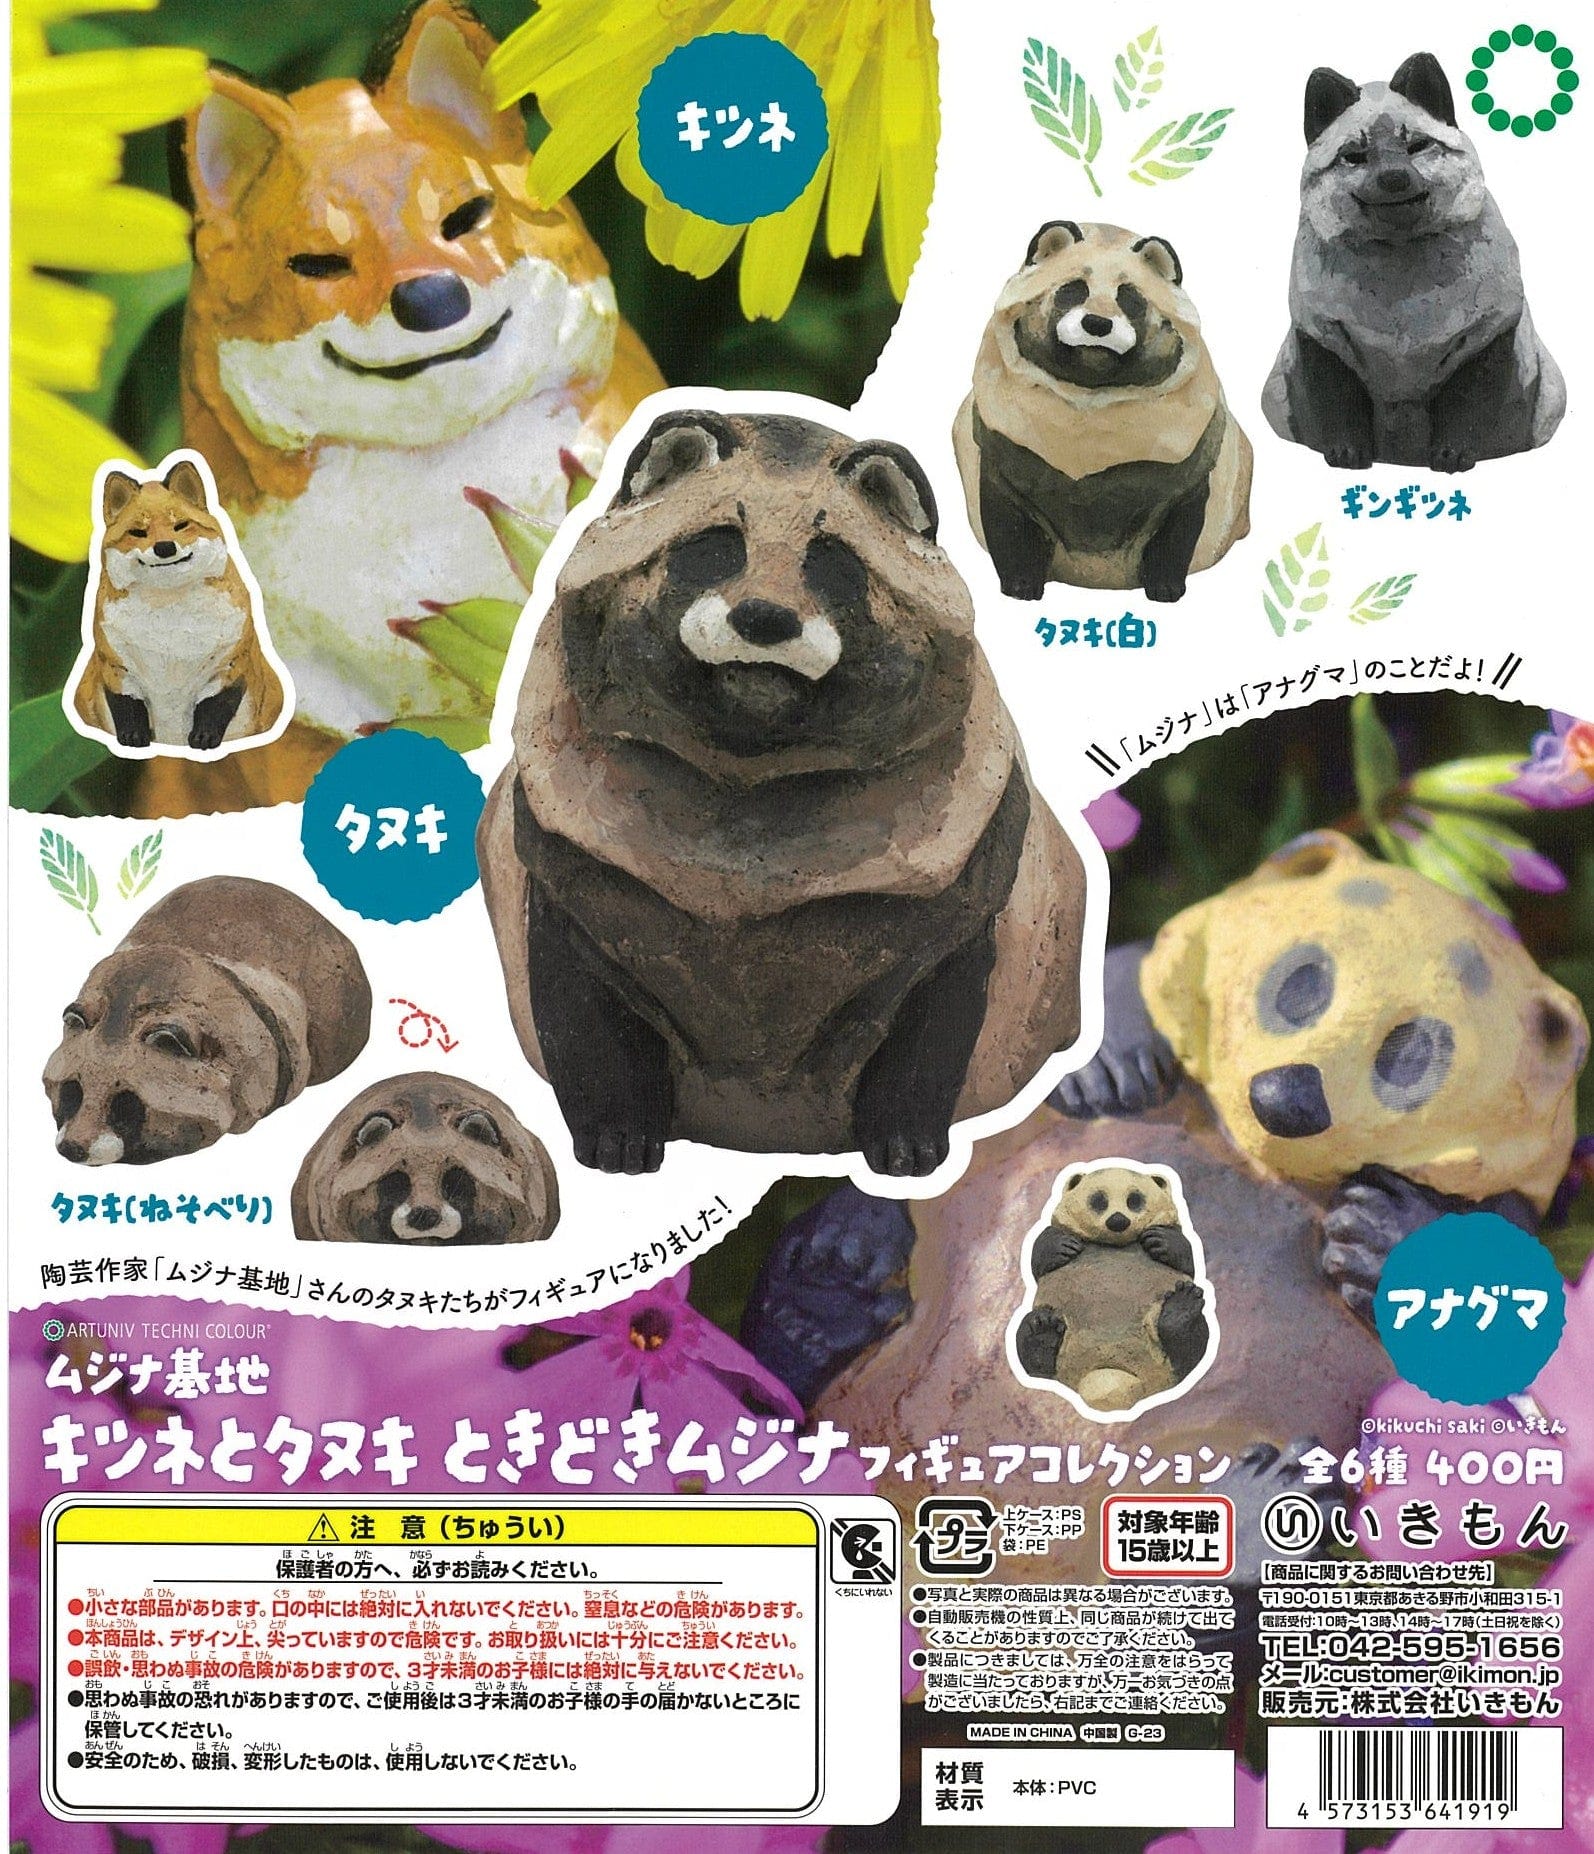 BANDAI gashapon toy kawaii cute animals get stood up tortoise sea otter  whale shark pig cat MACHIBOKE P6 capsule figures